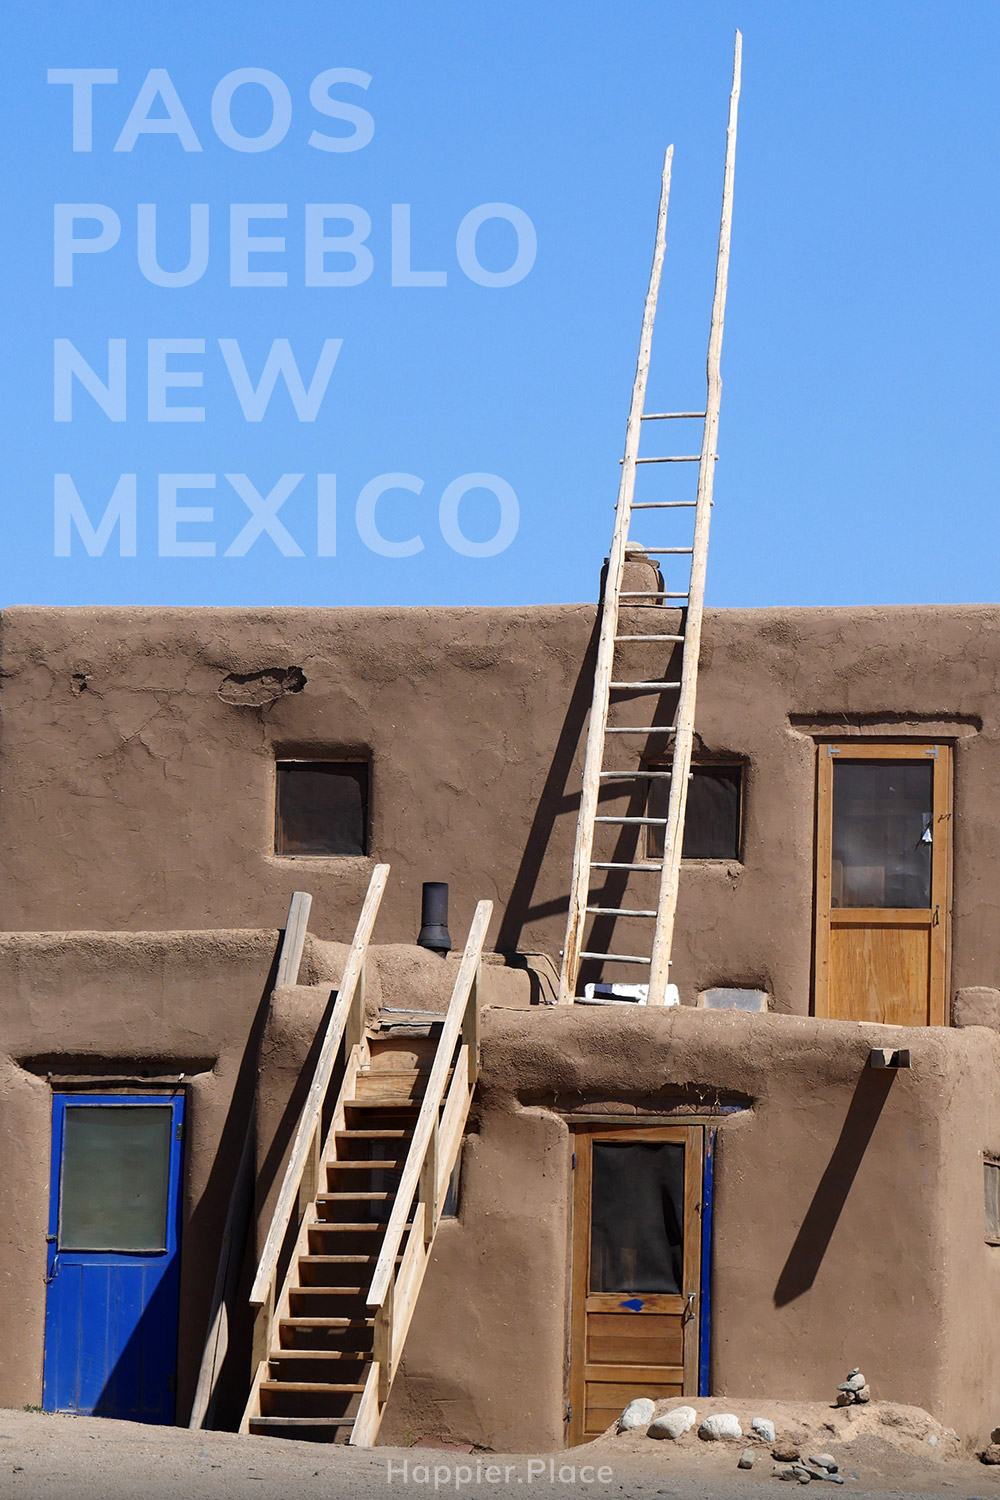 Taos Pueblo, New Mexico, adobe pueblo architecture, ladder to the sky, staircase, blue door, wooden door, Ansel Adams inspiration, Happier Place